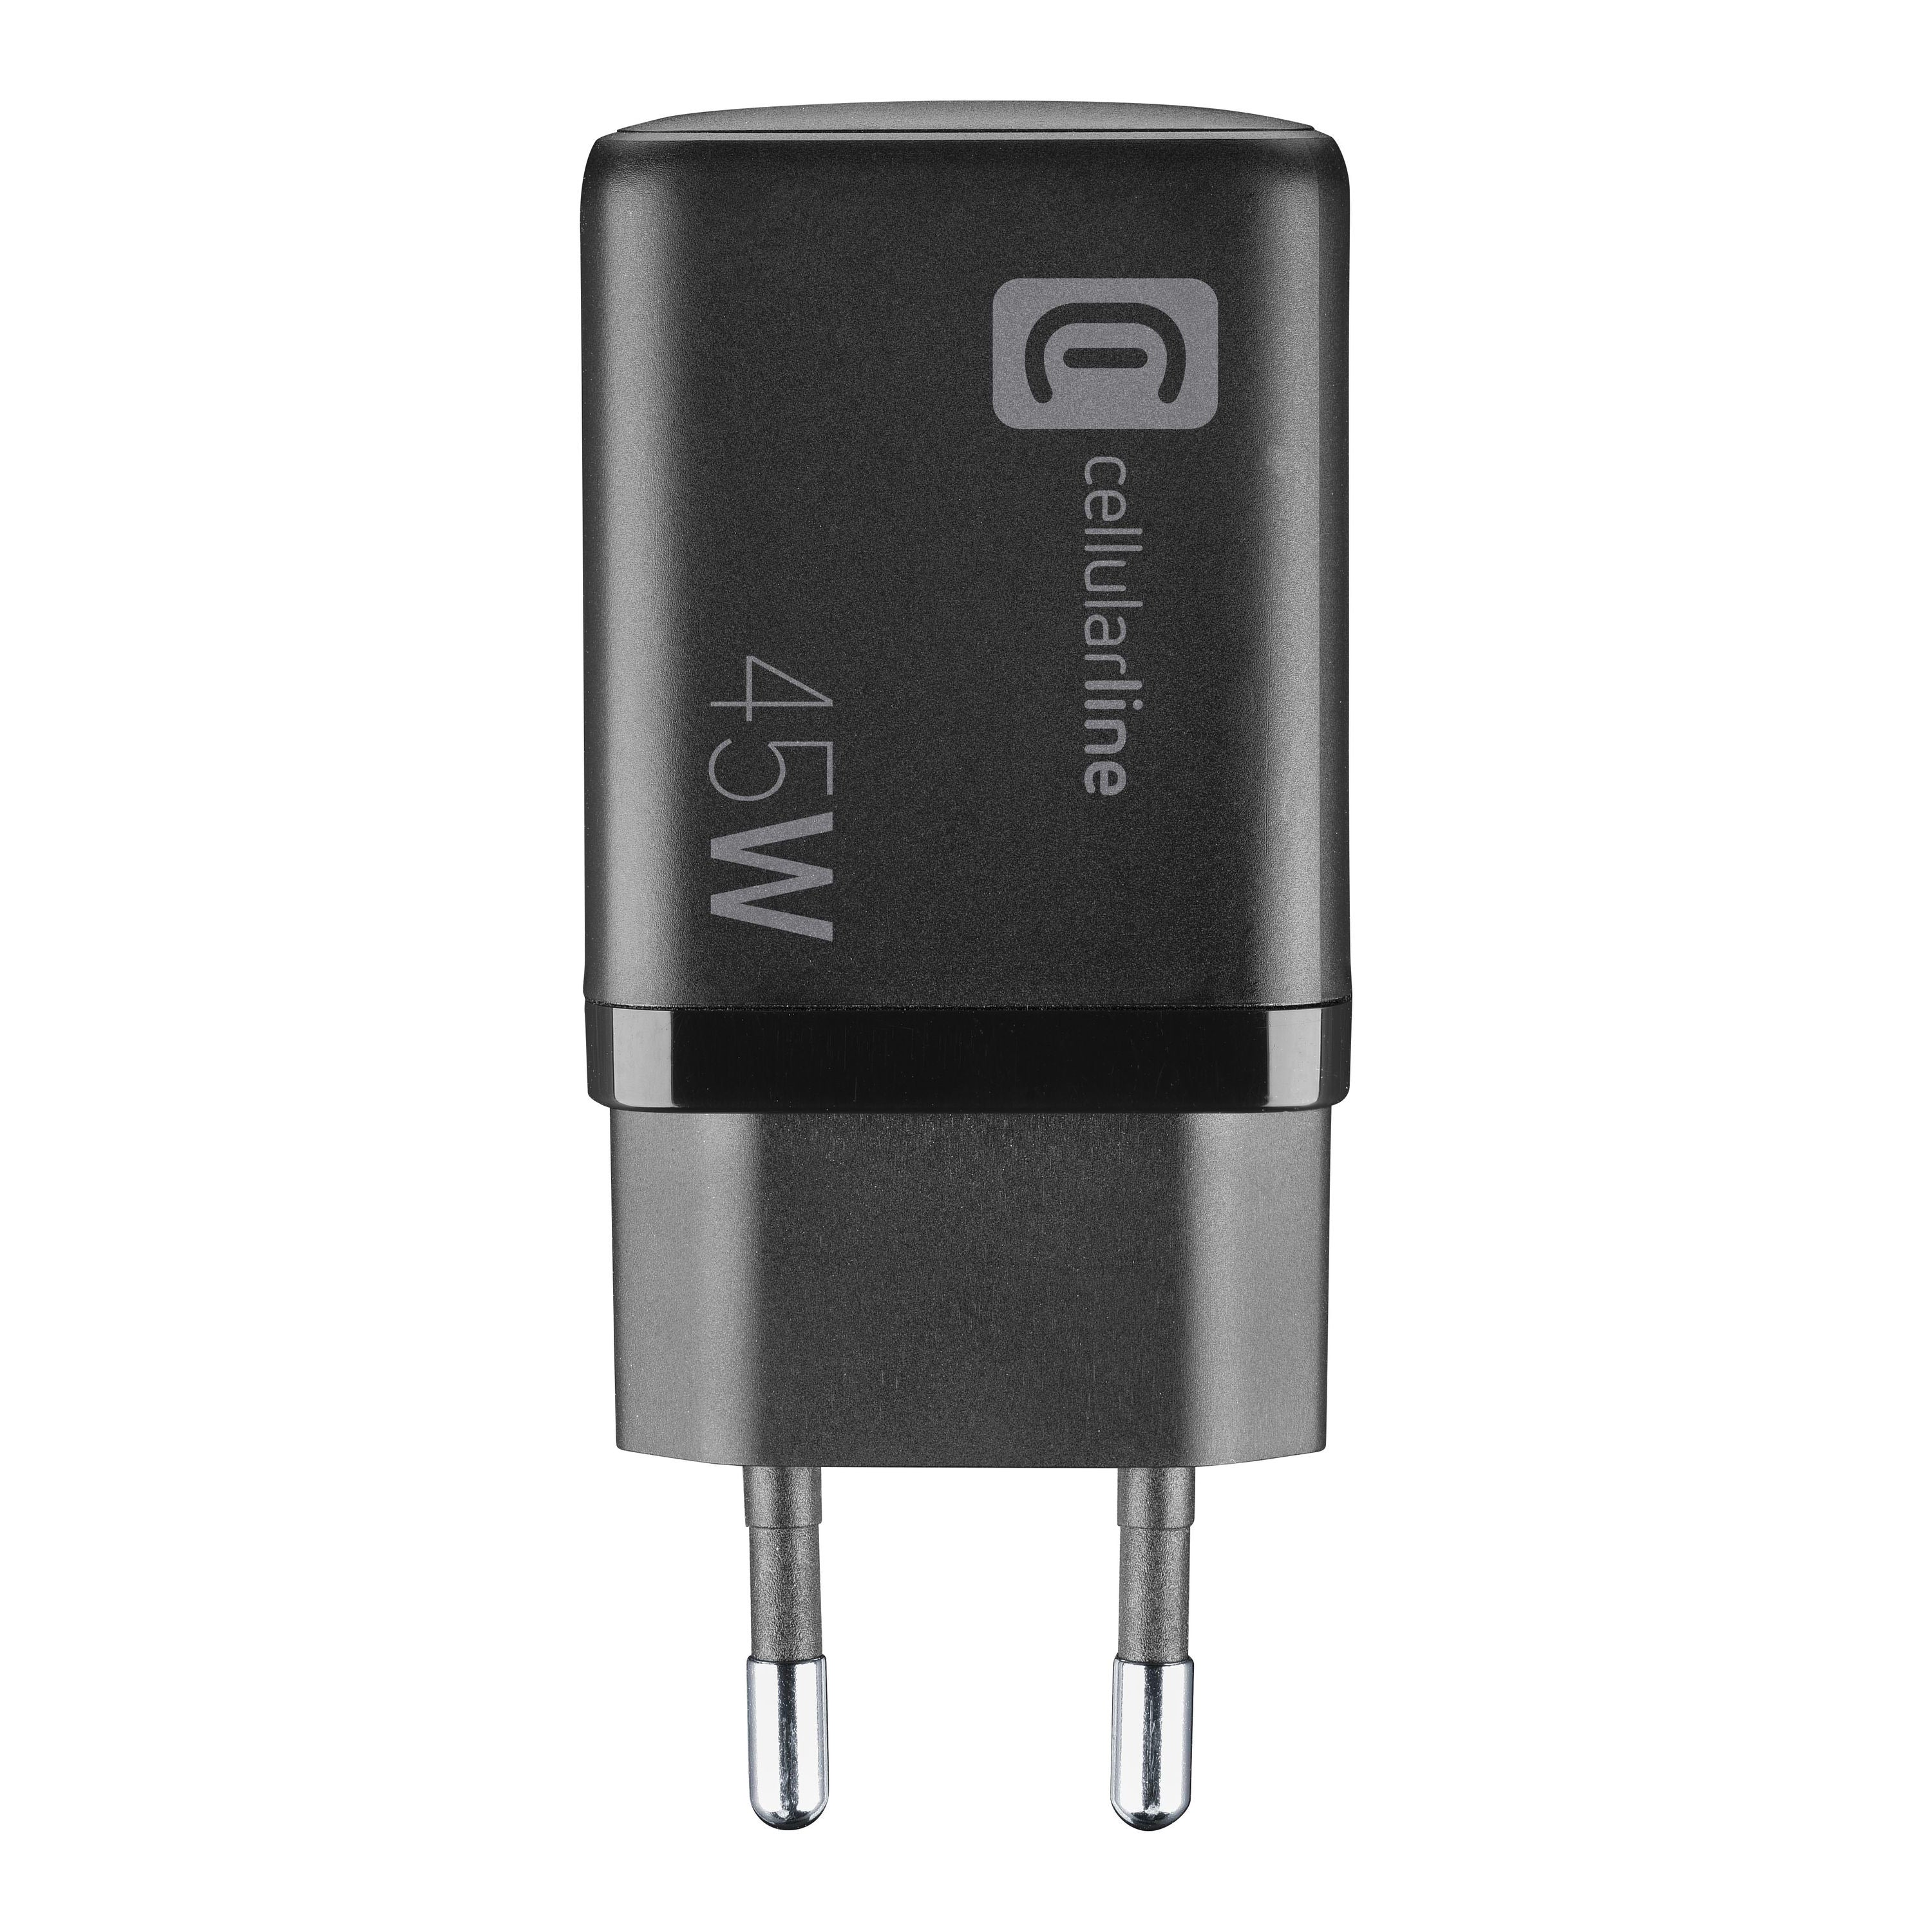 Multipower Micro 45W – MR Global